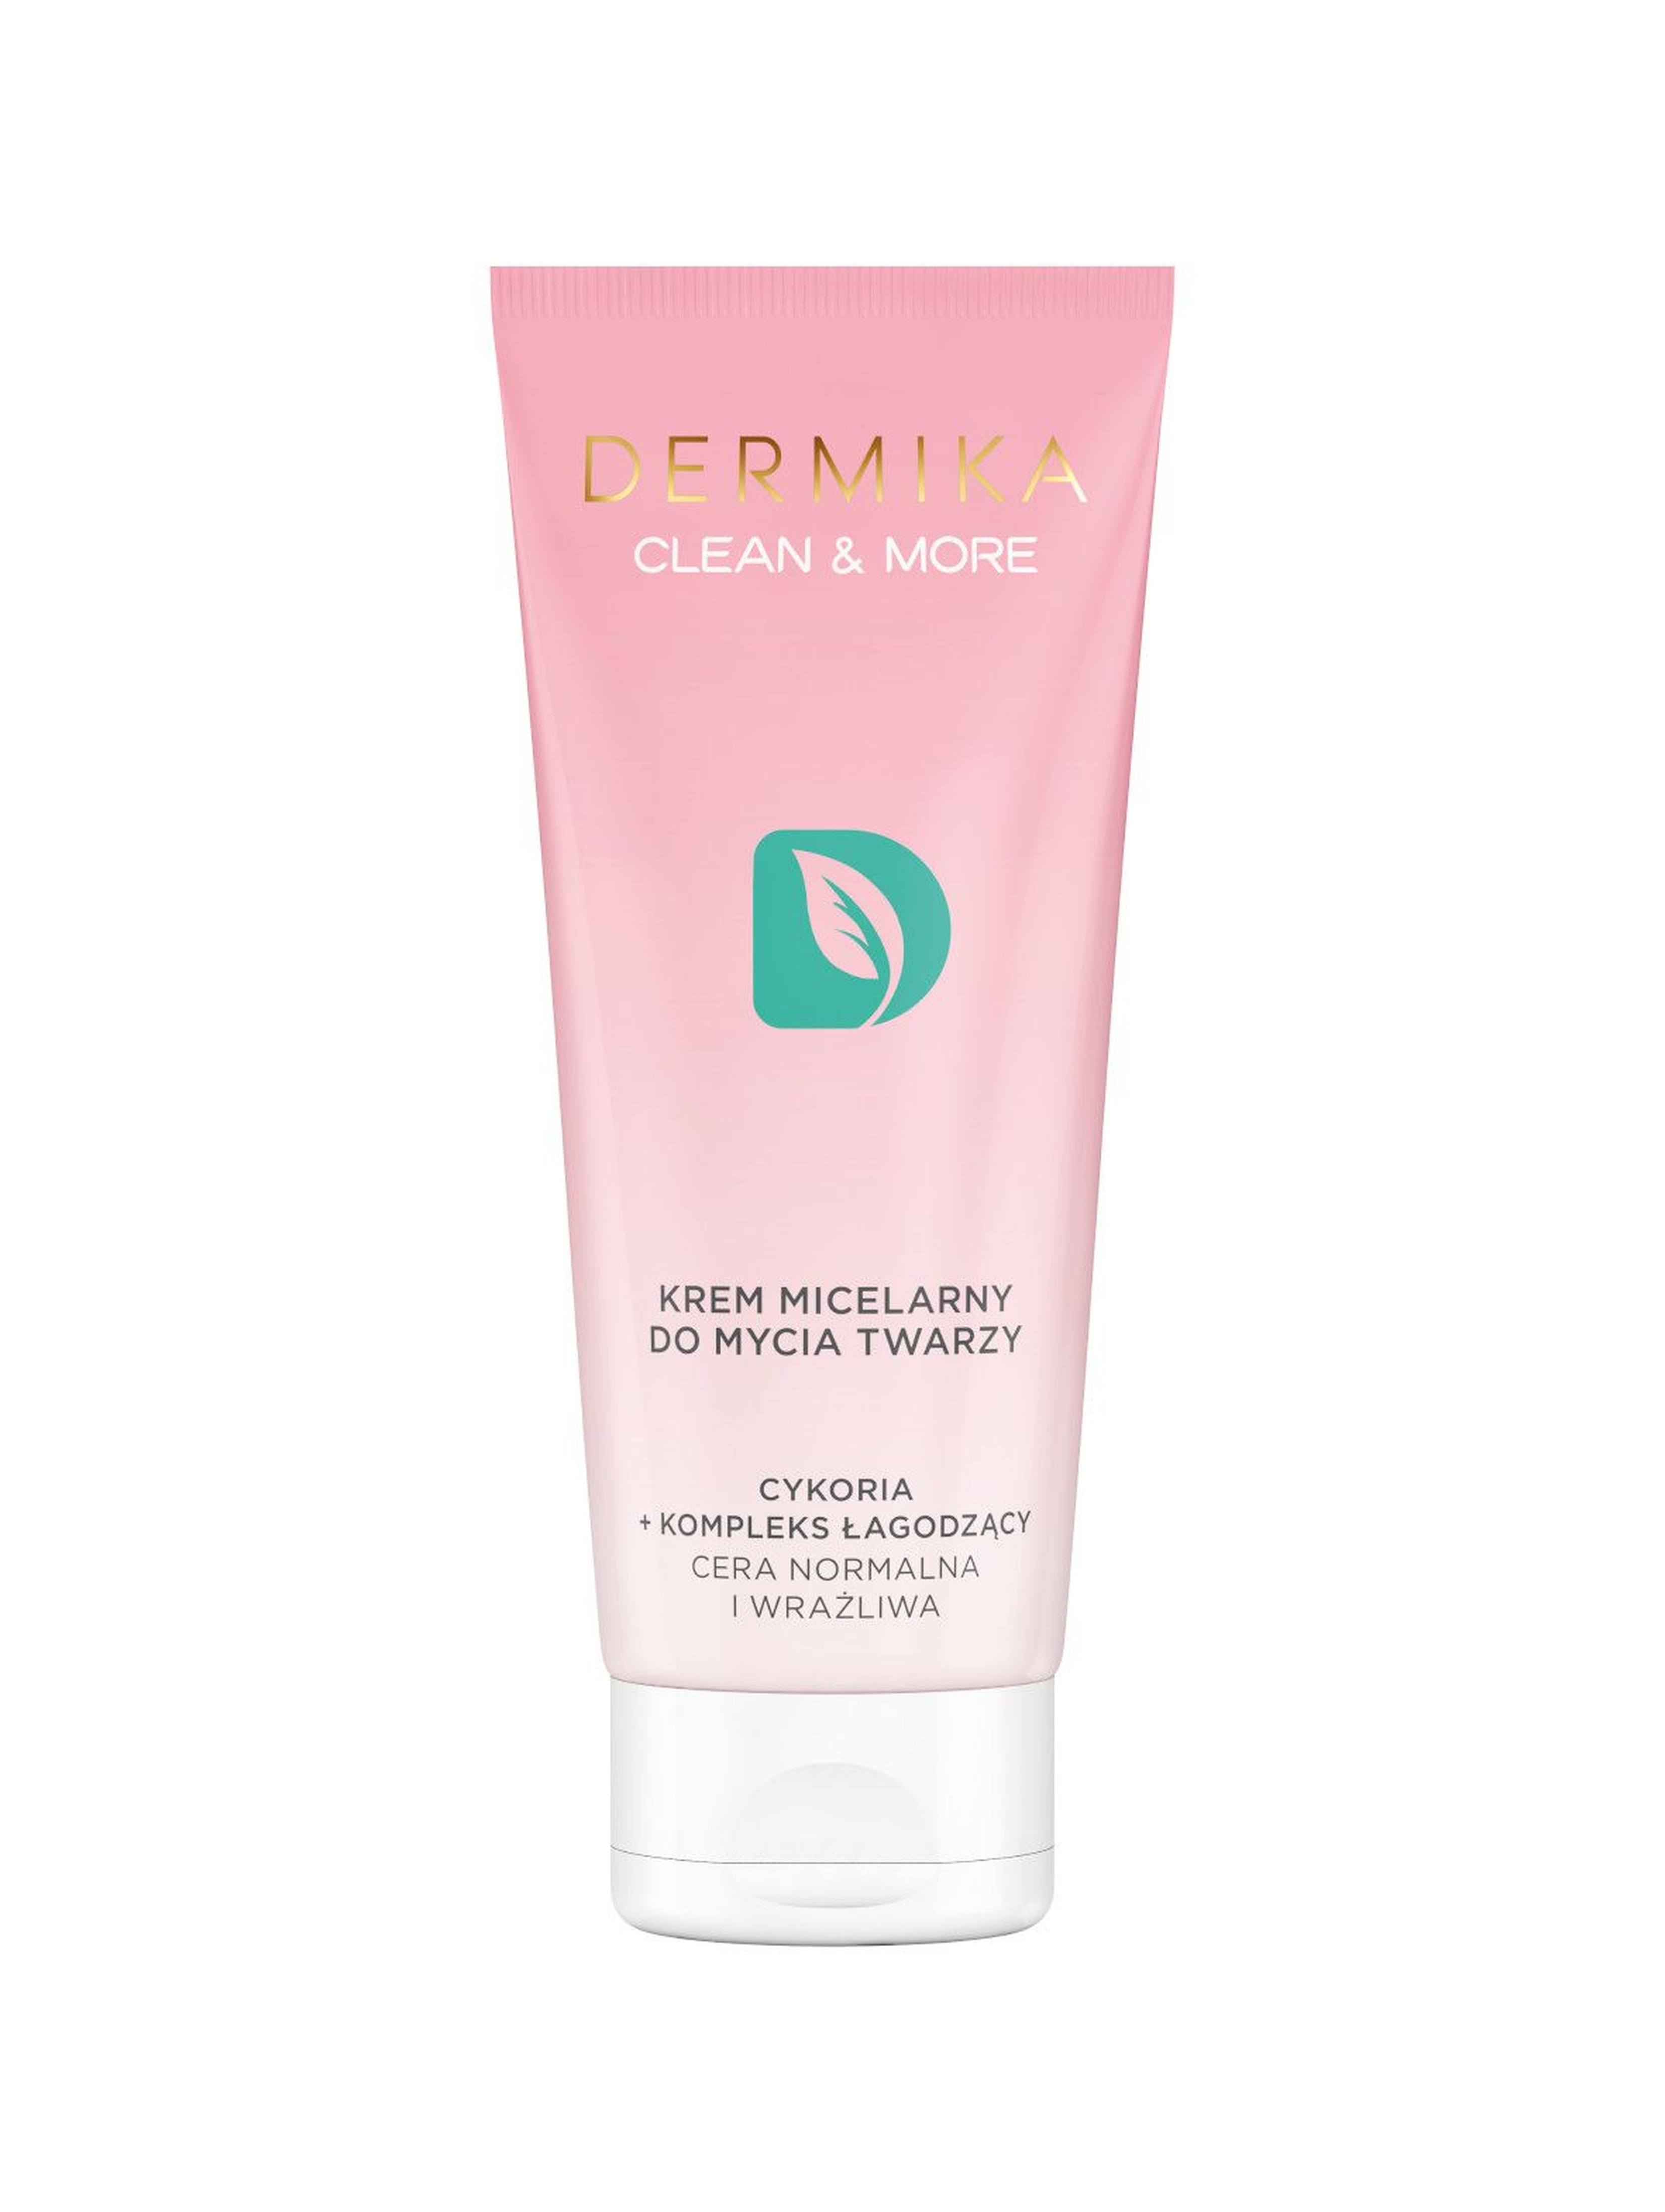 DERMIKA CLEAN&MORE krem micelarny do mycia twarzy  - 150ml